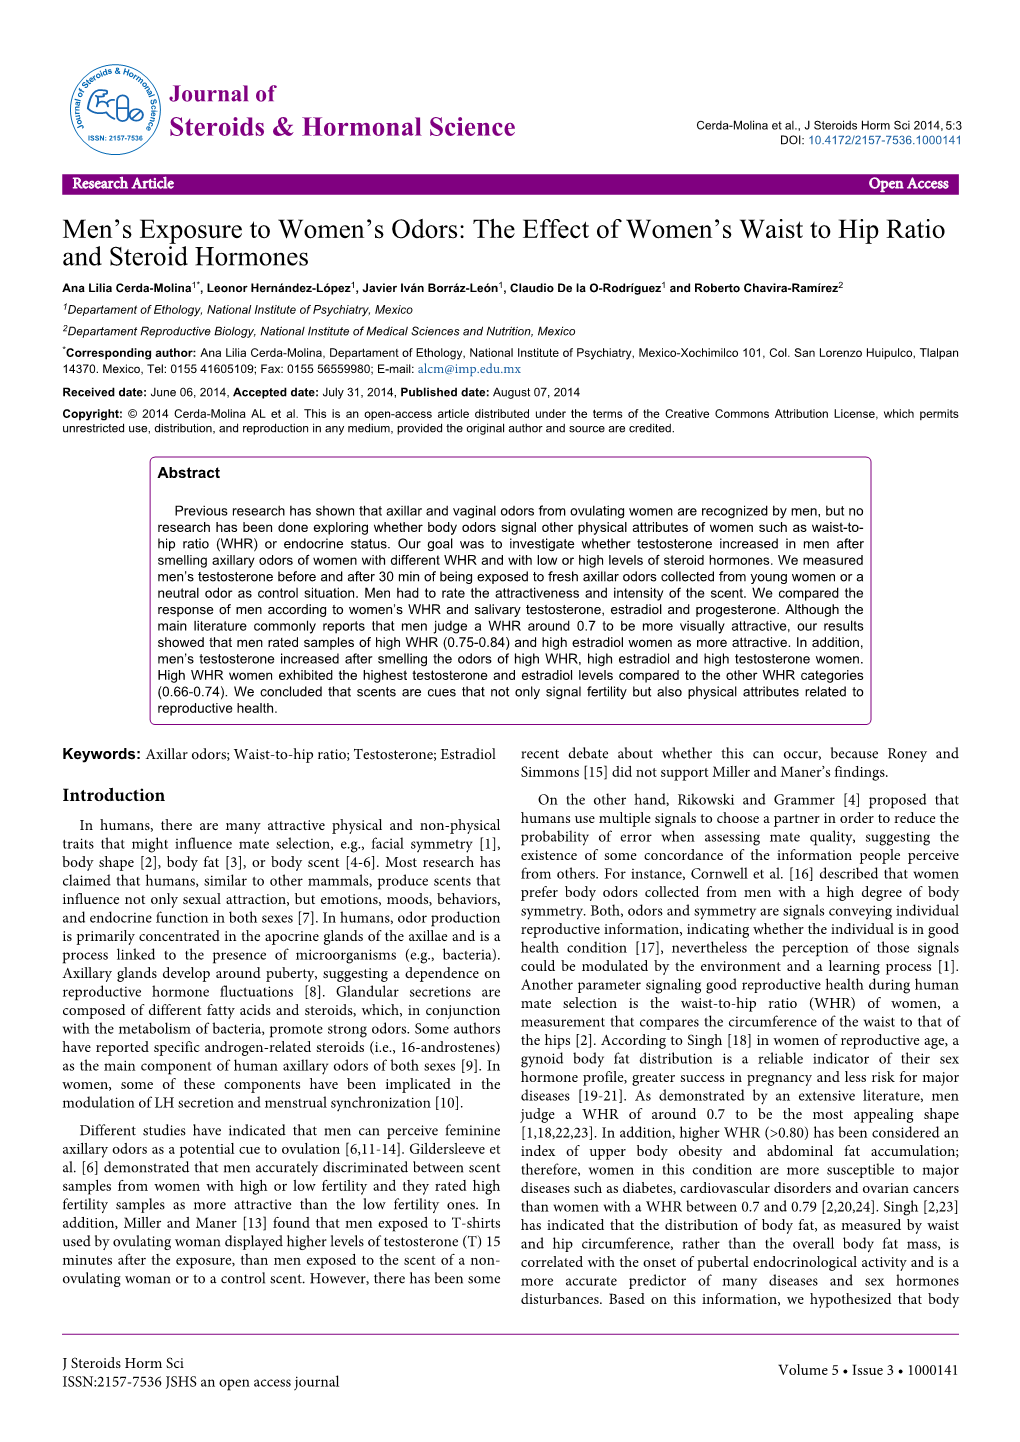 Men's Exposure to Women's Odors: the Effect of Women's Waist to Hip Ratio and Steroid Hormones